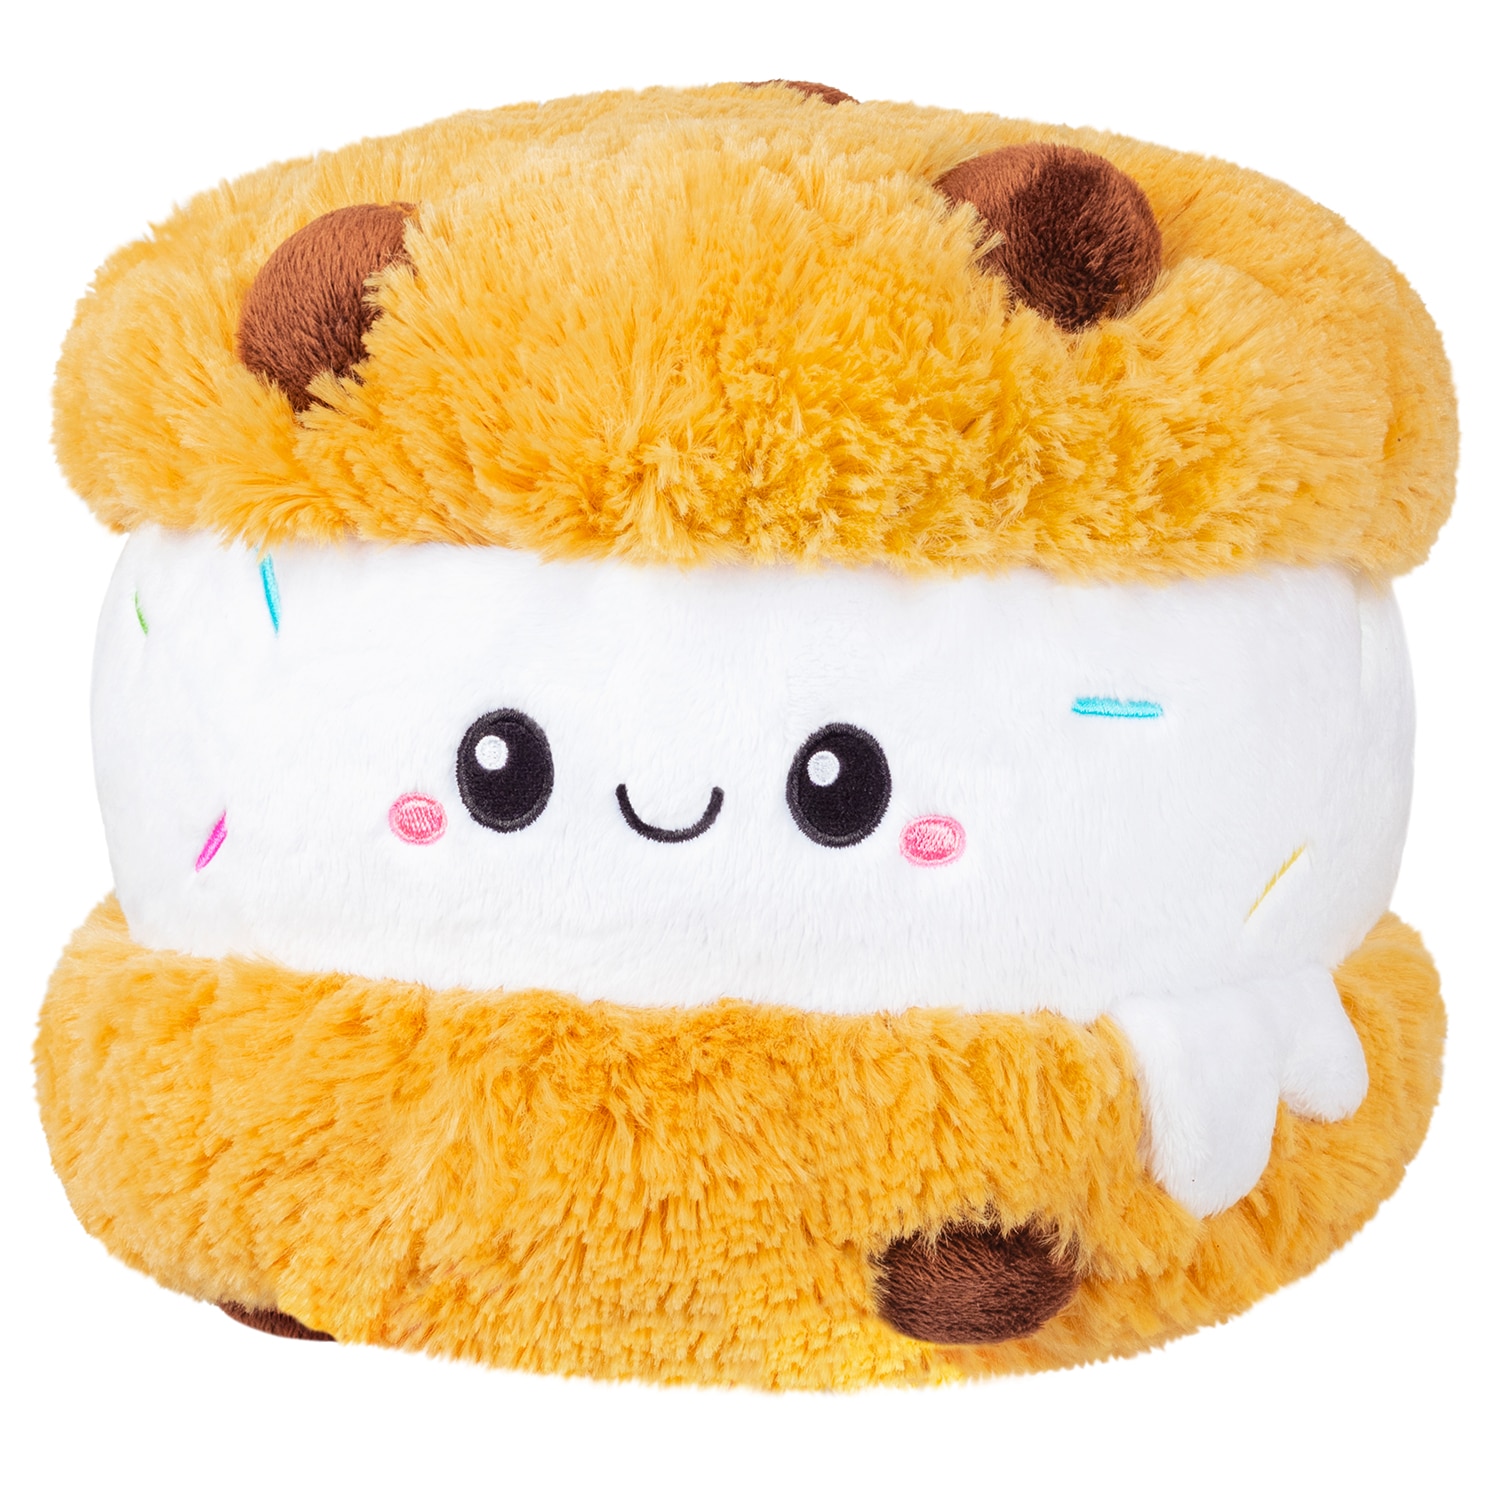 Mini Cookie Icecream Sandwich